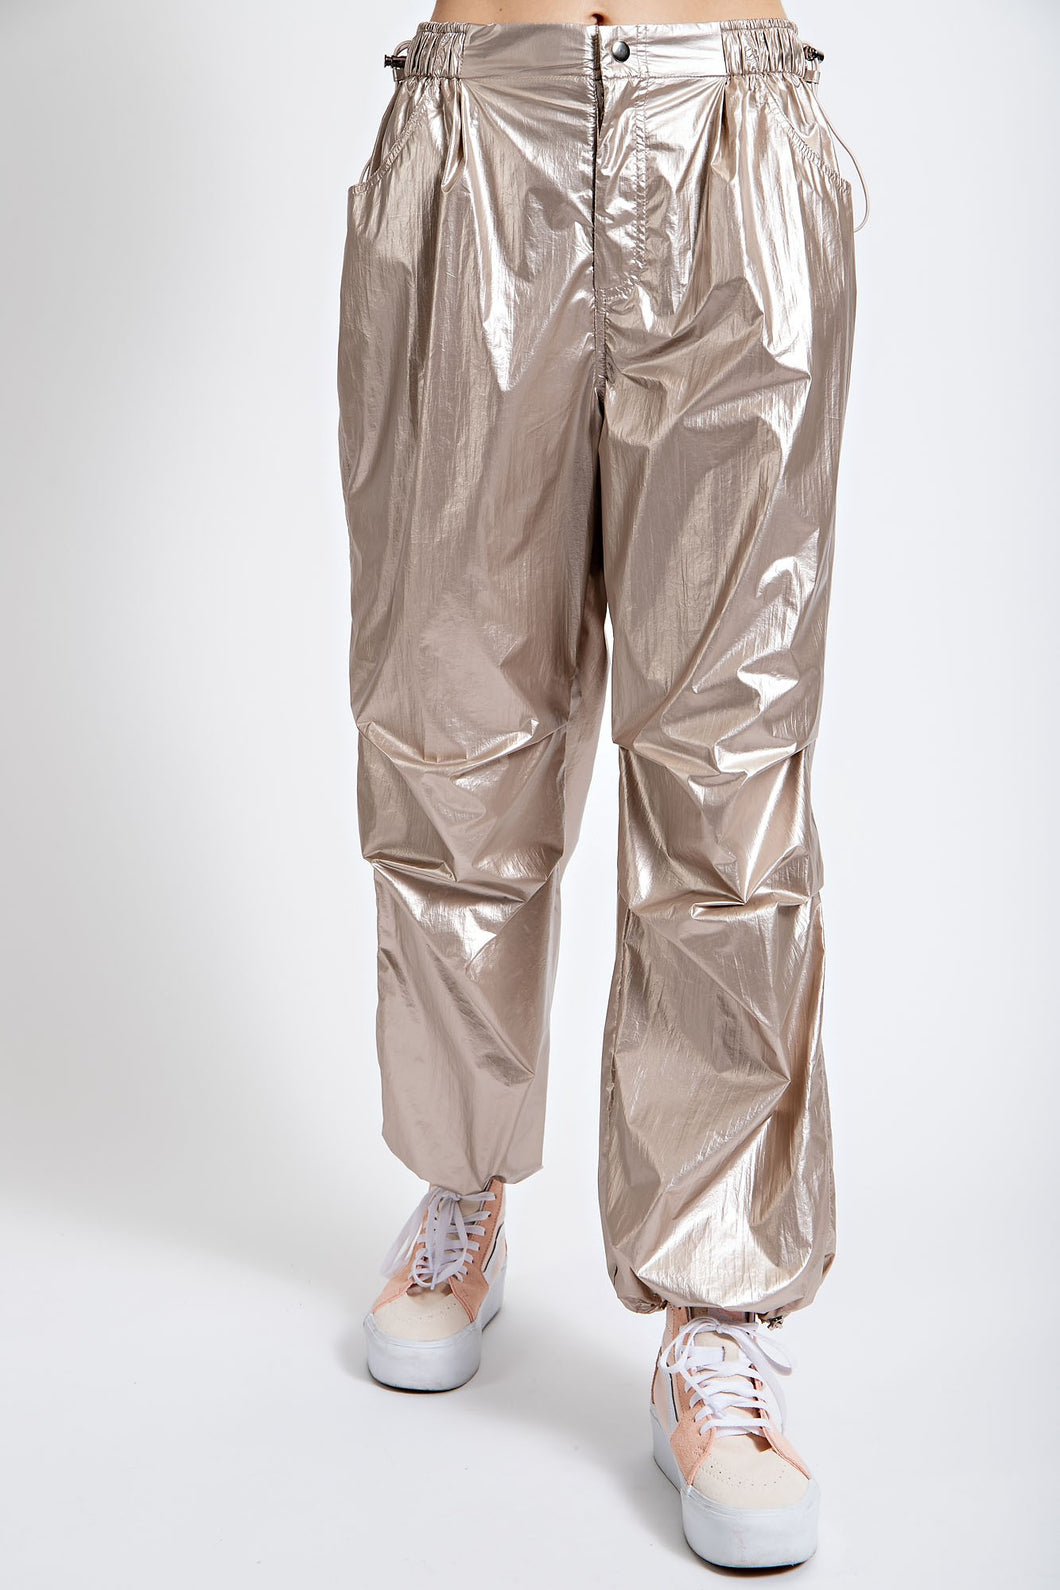 Easel Metallic Parachute Cargo Pants in Champagne Pants Easel   